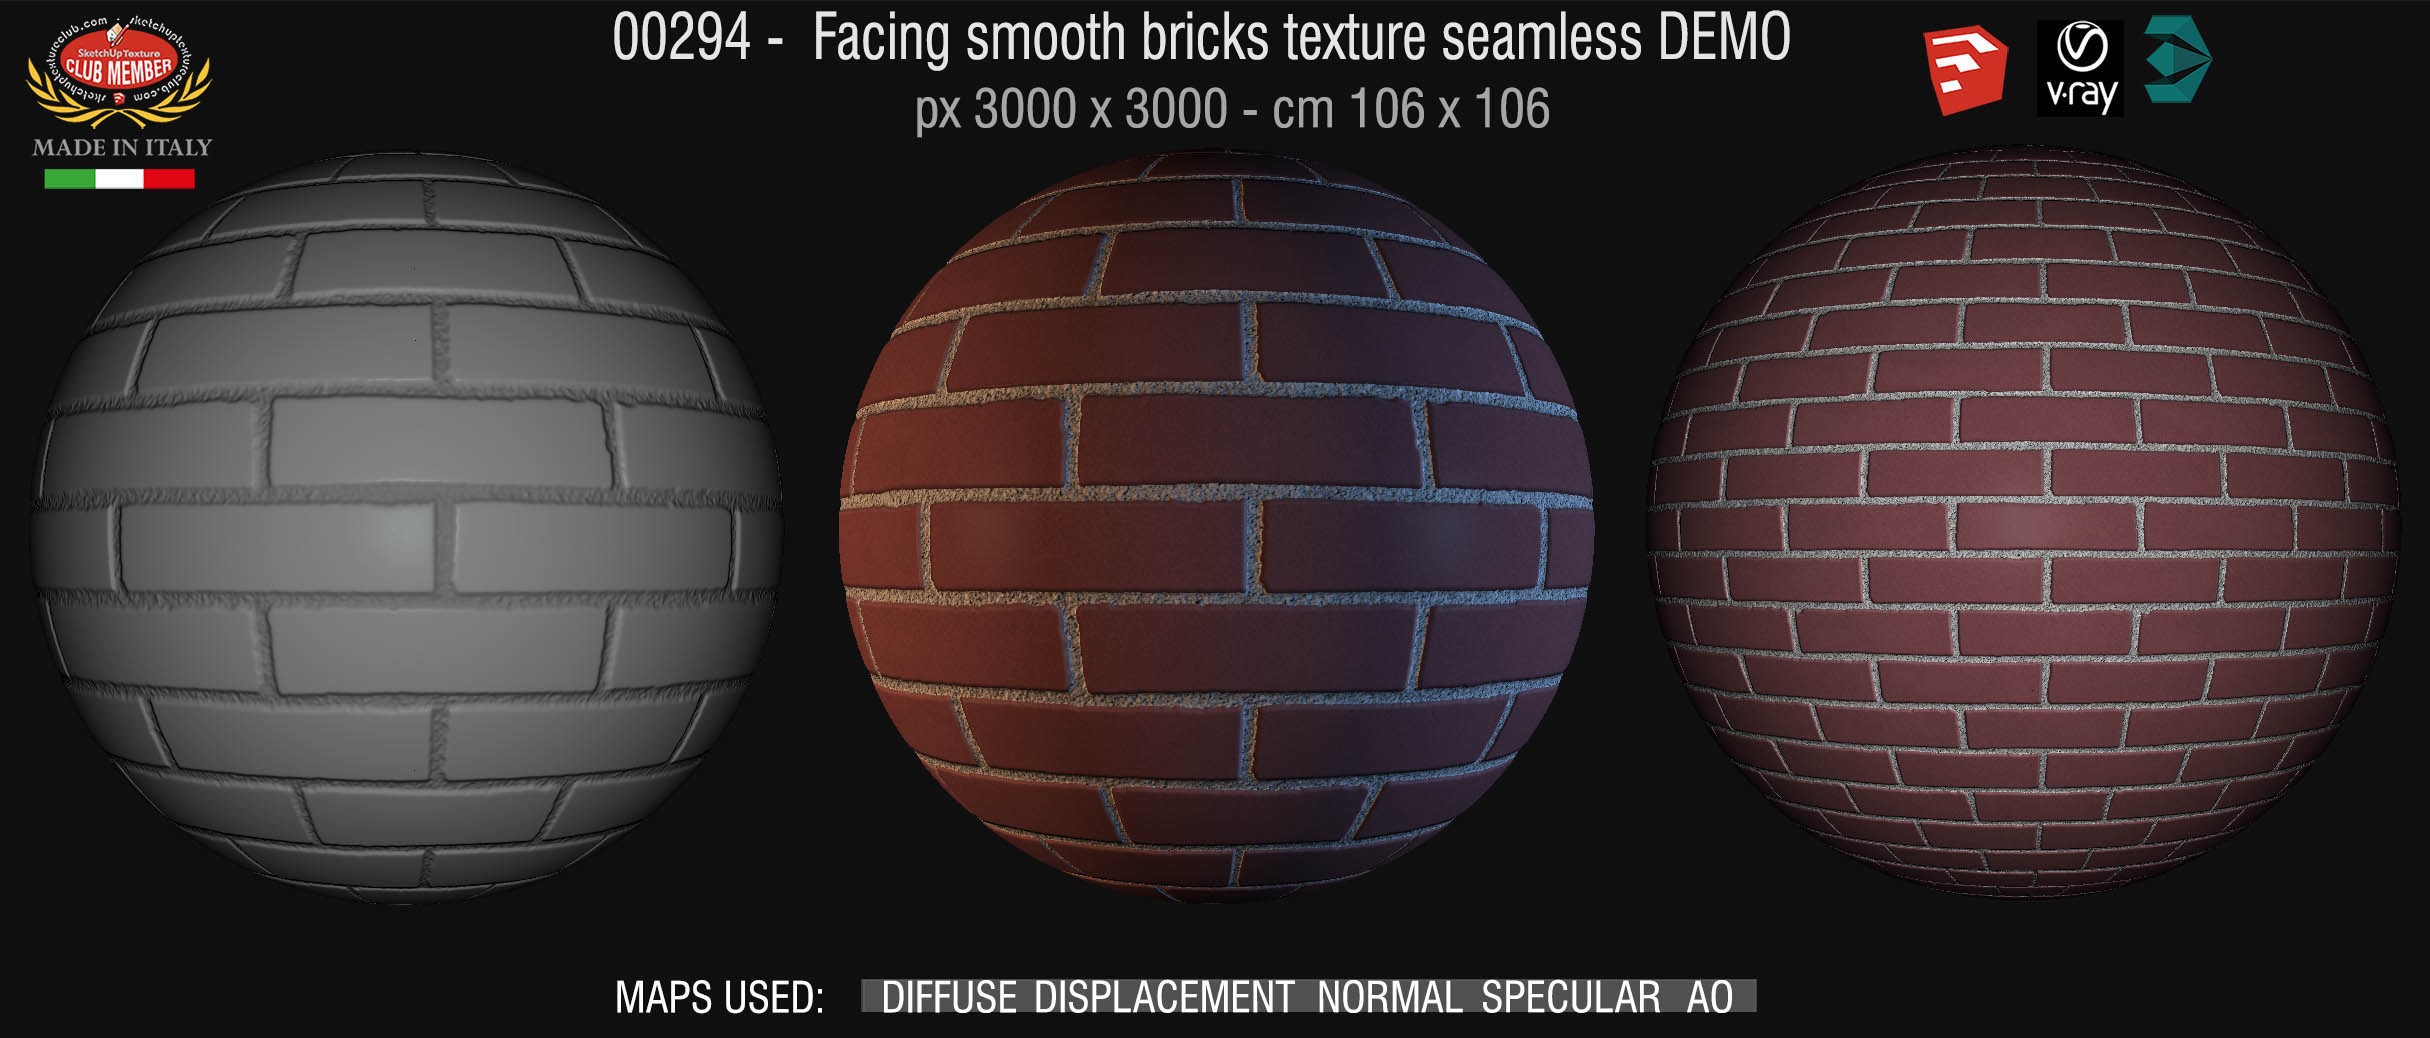 00294 Facing smooth bricks texture seamless + maps DEMO